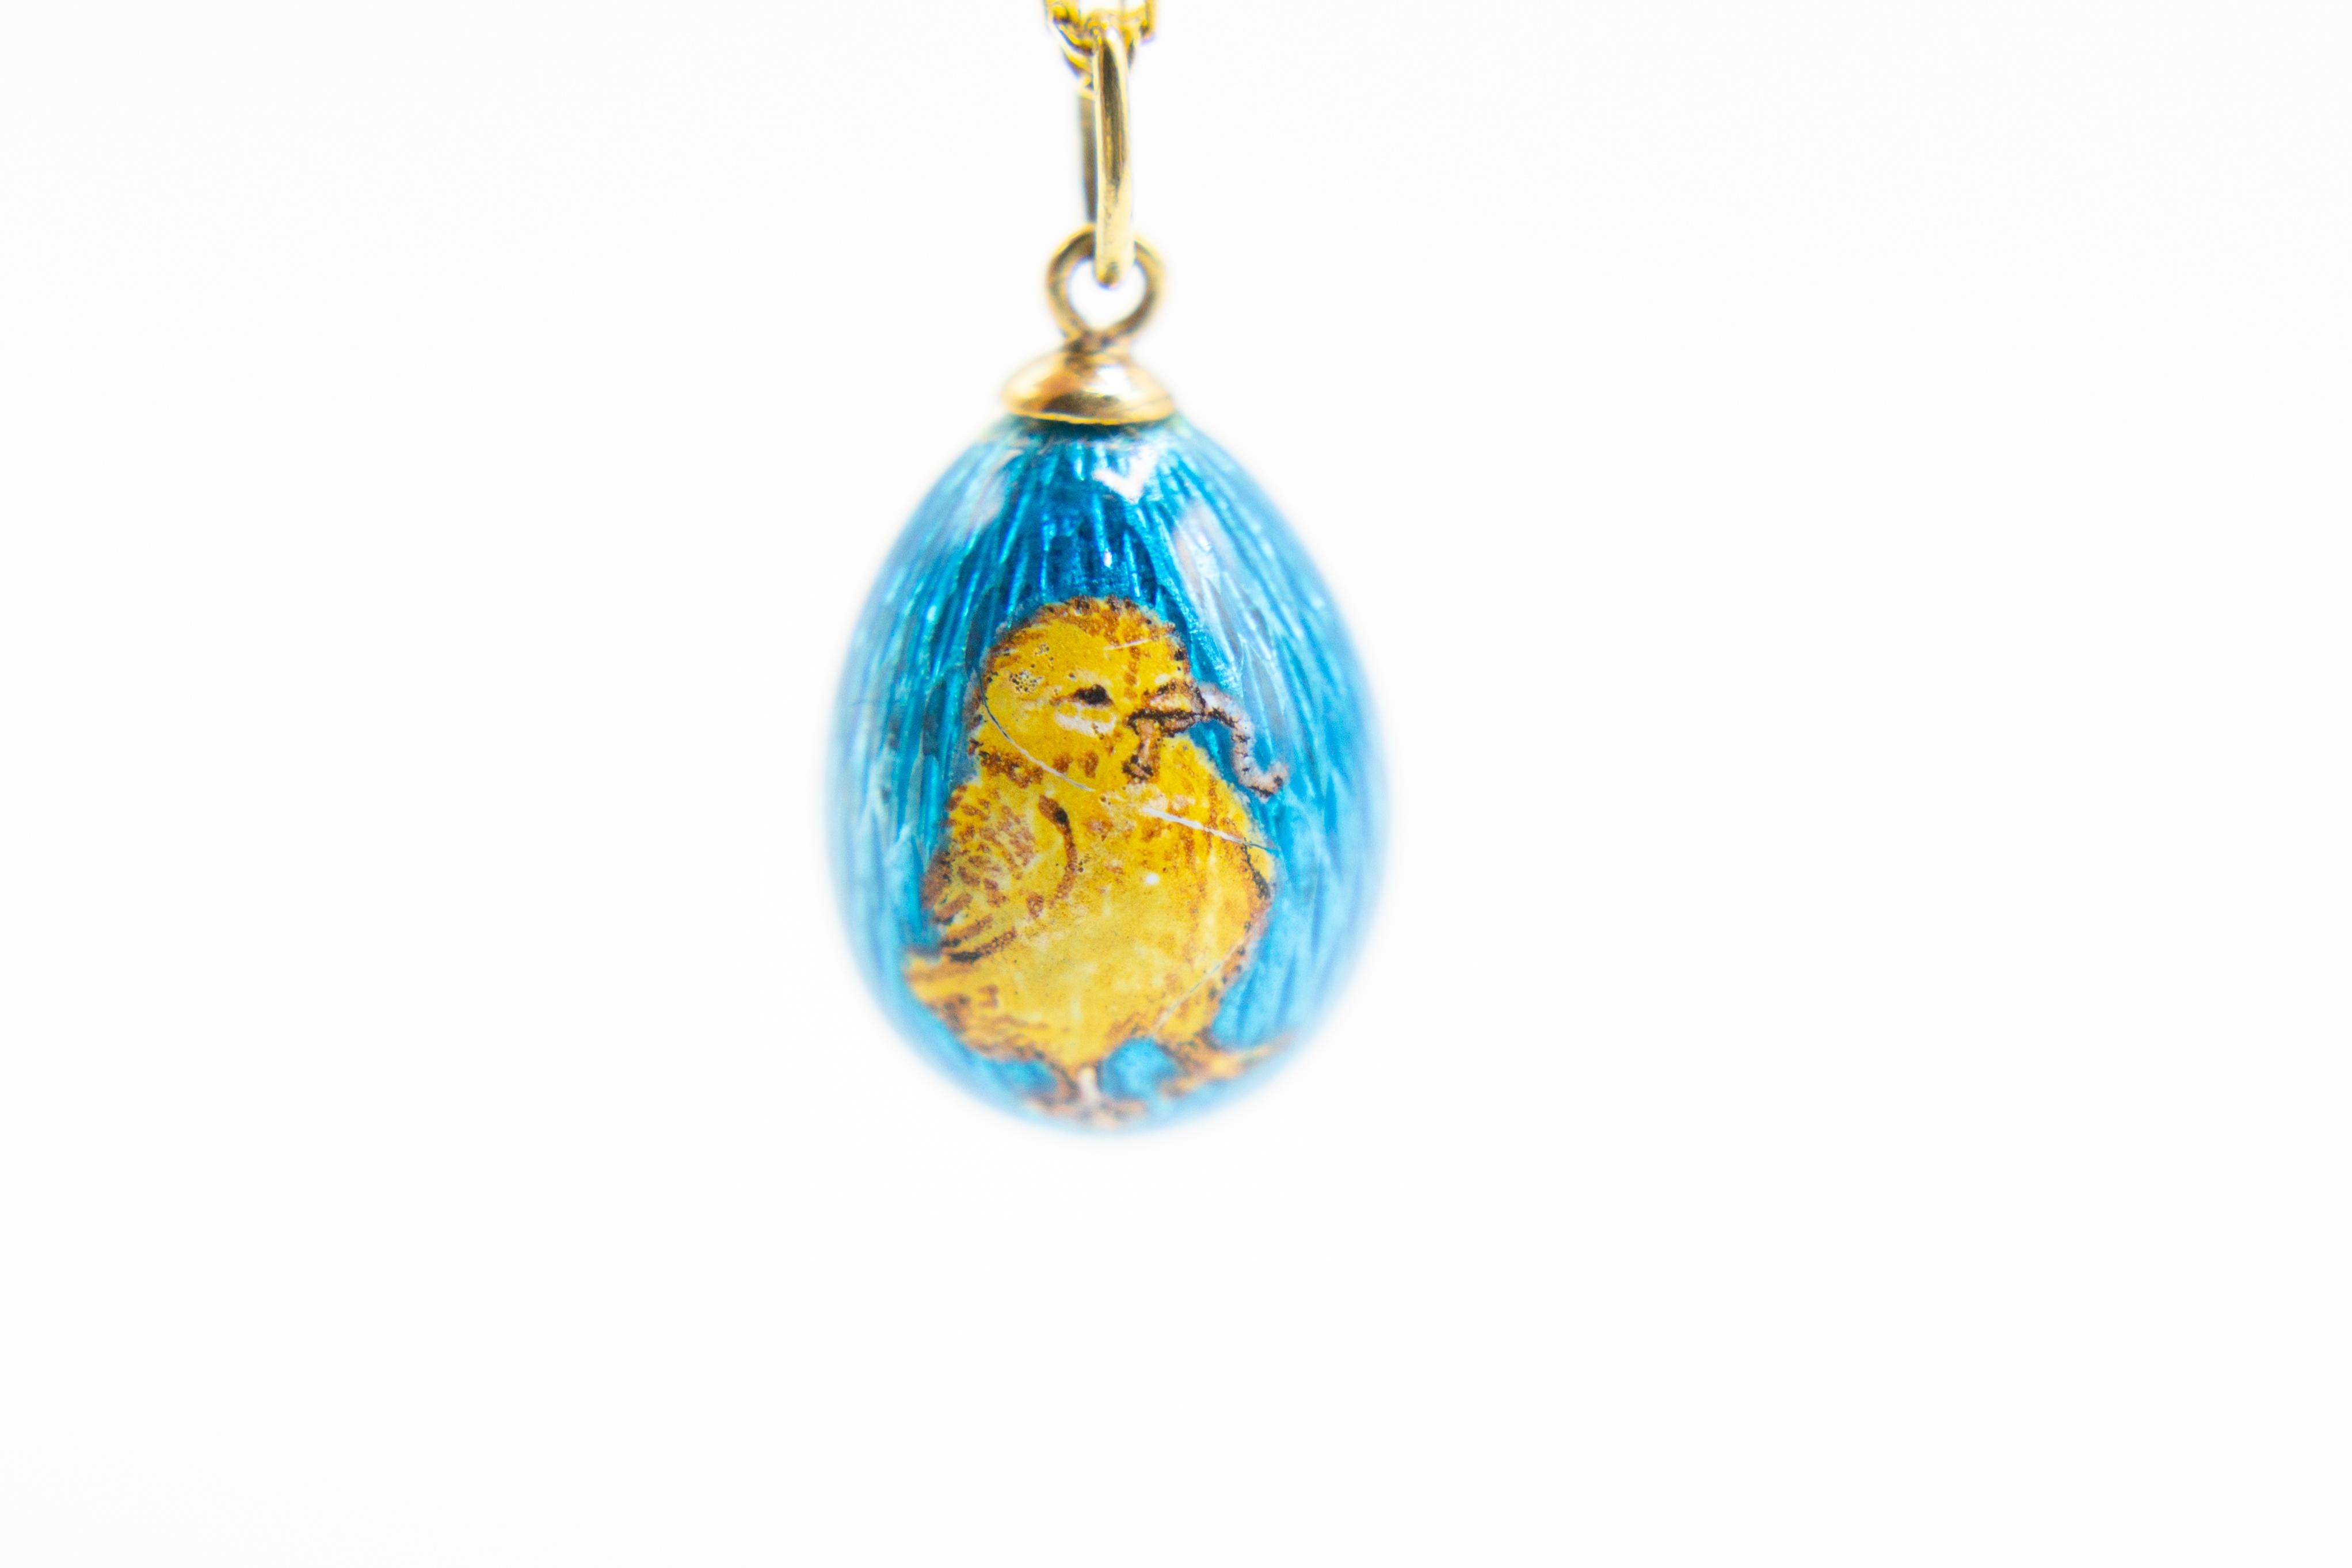 Russian 14 Karat Gold Guilloche Enamel Egg Chick Charm Pendent, Iridescent For Sale 8